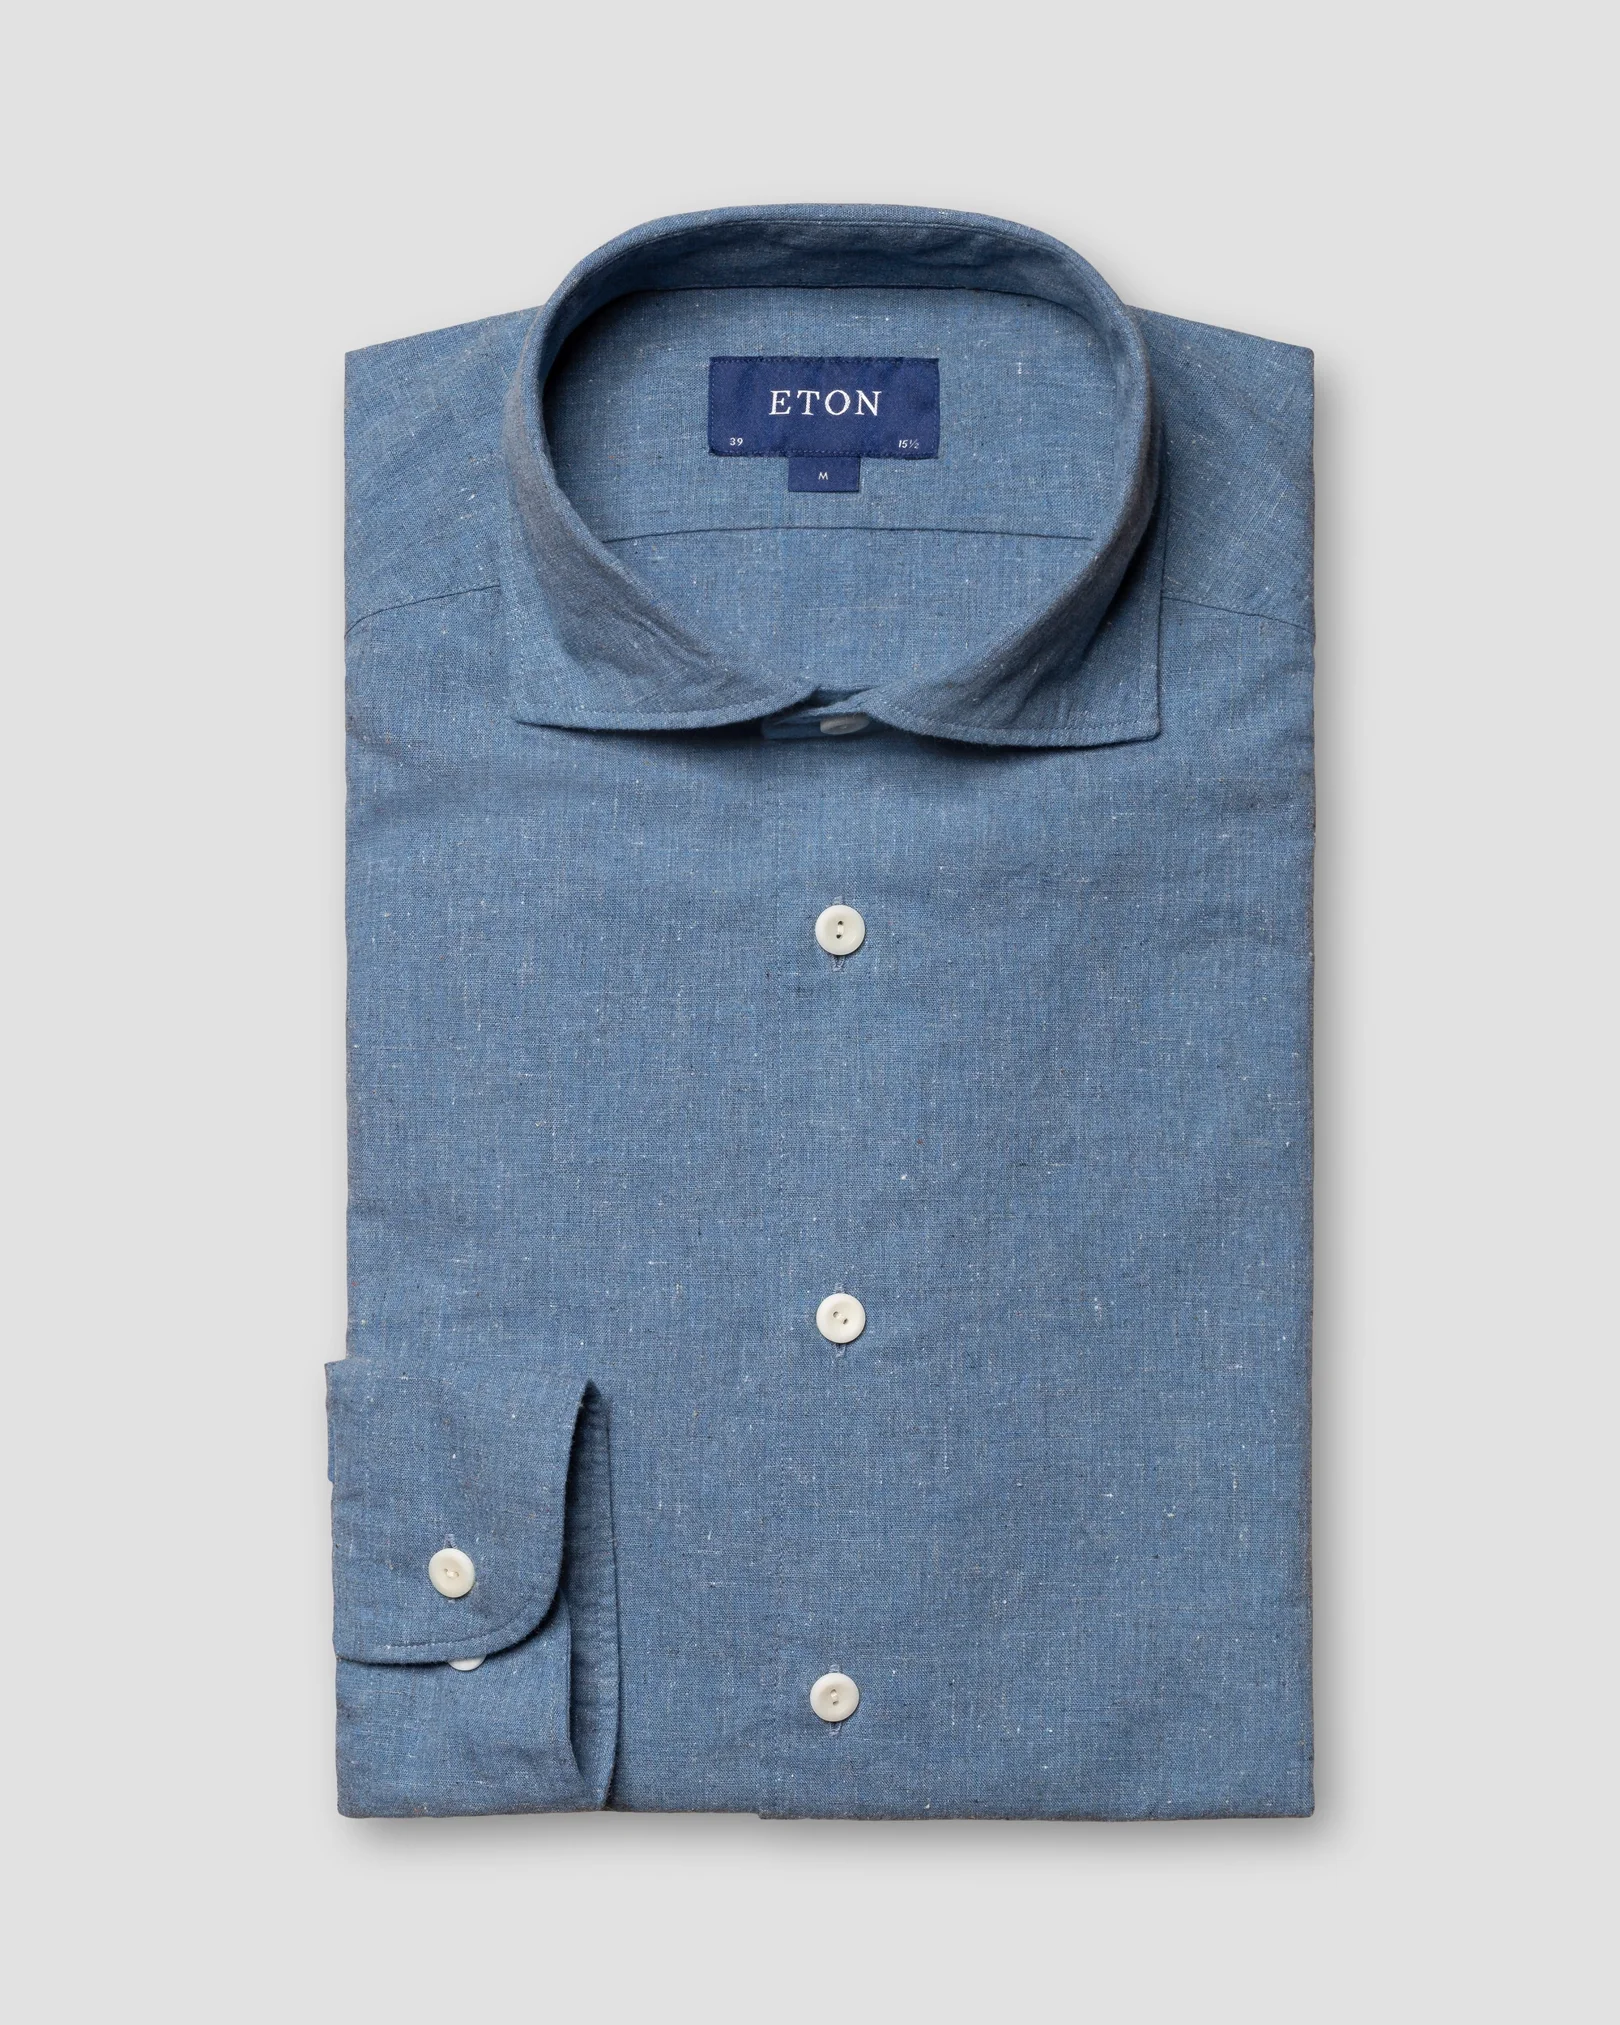 Eton - mid blue indigo wide shirt